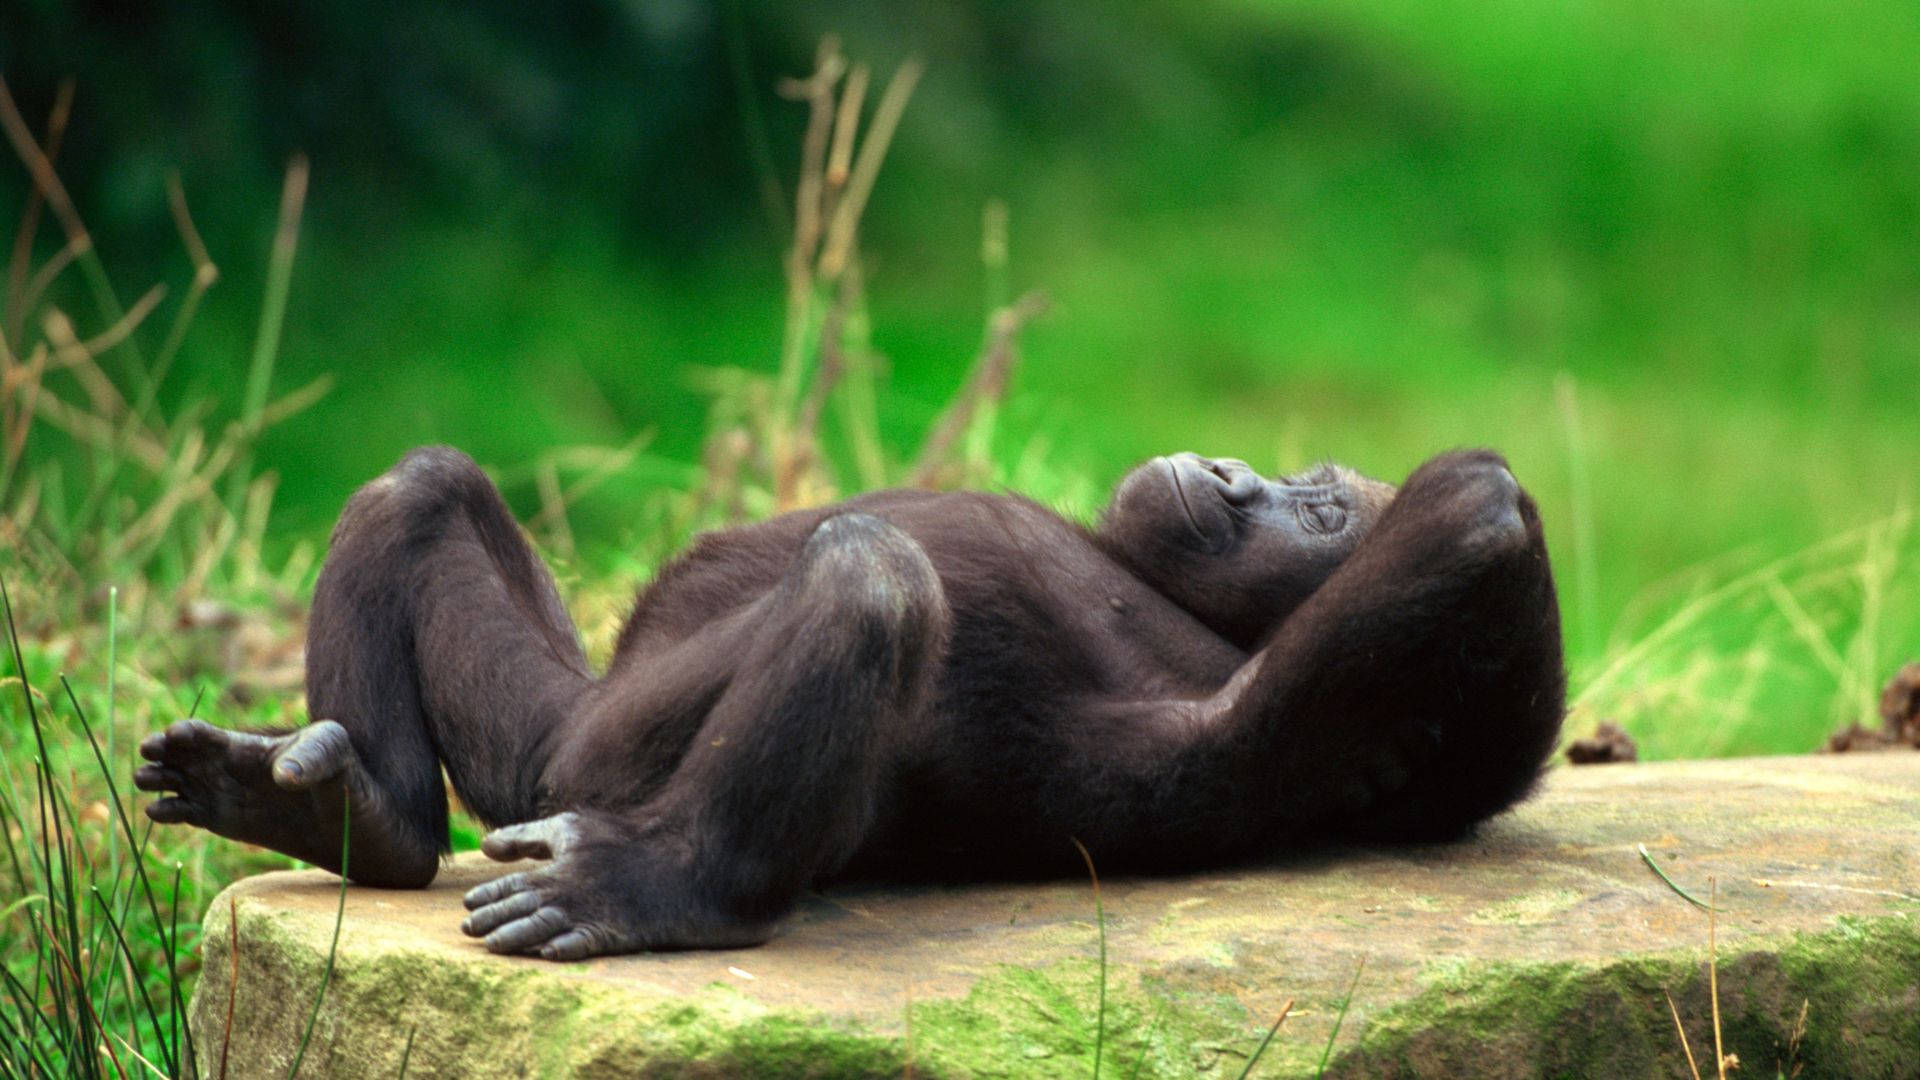 A powerful and majestic silverback gorilla atop a desktop Wallpaper